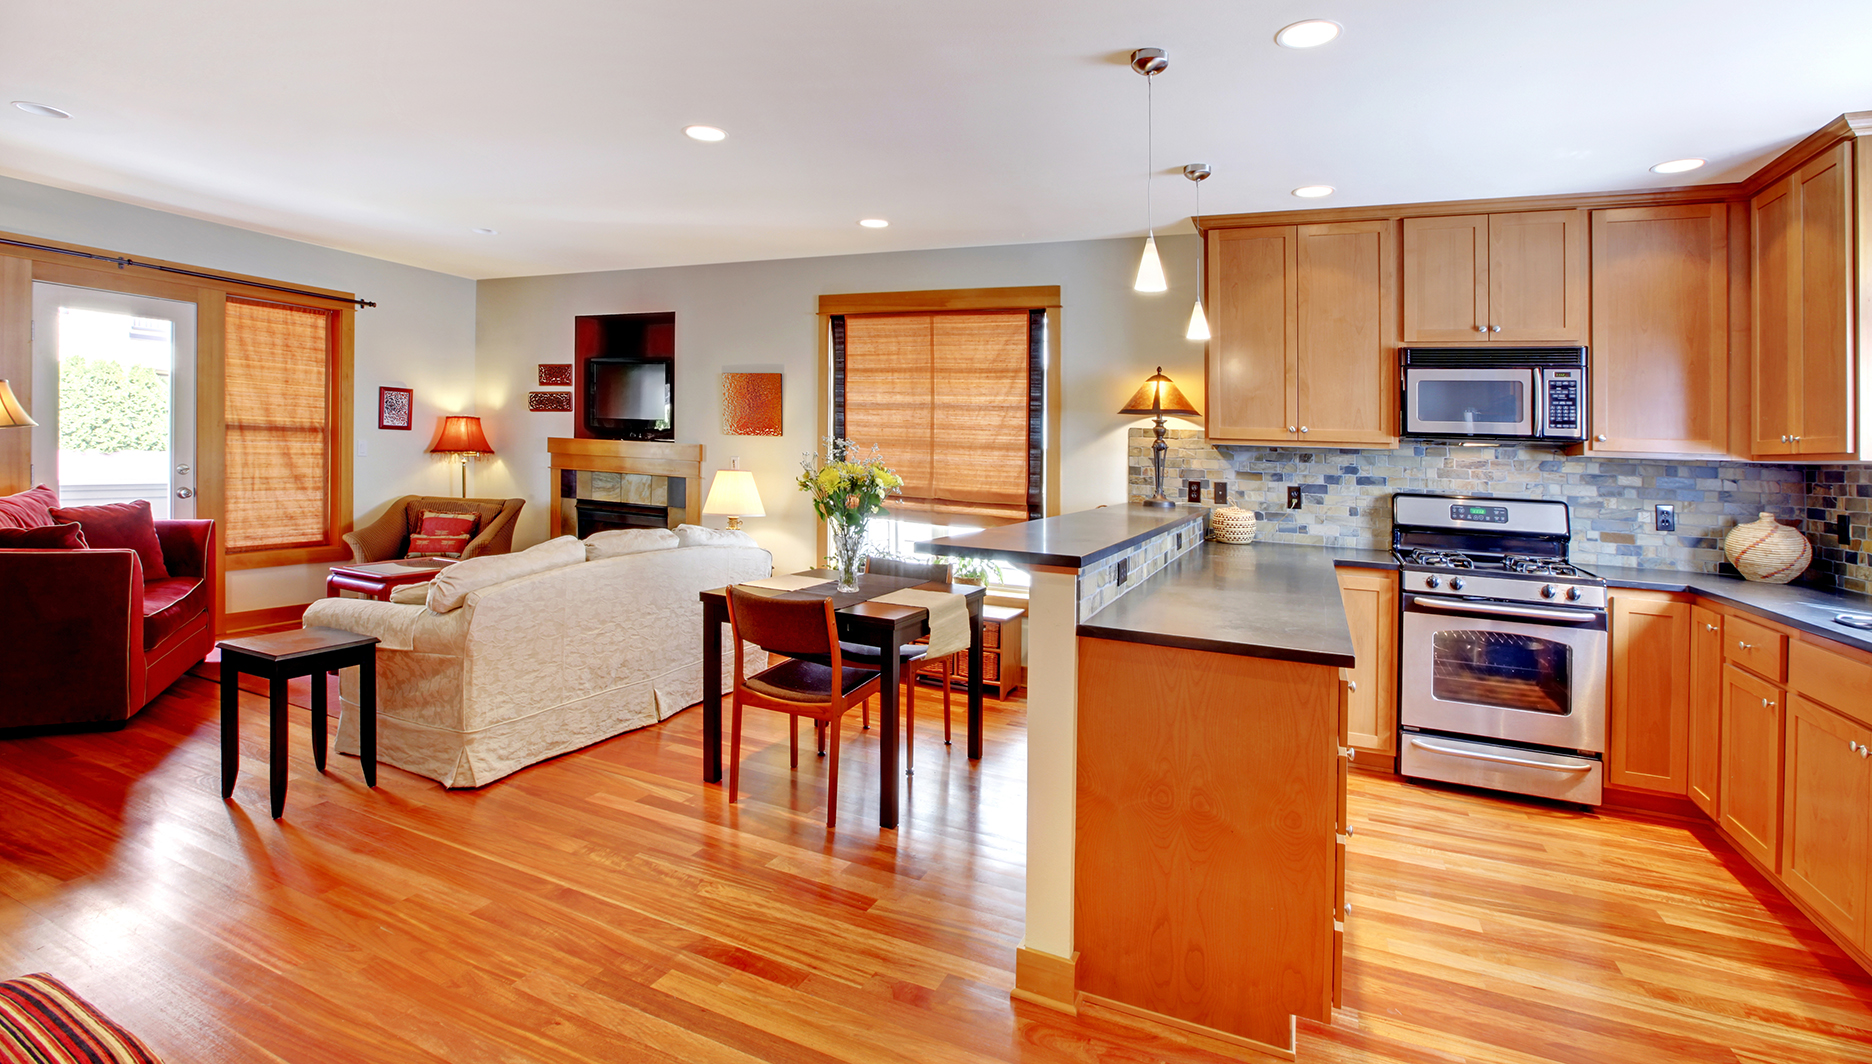 20 Stunning Open Floor Plan Kitchen And Living Room